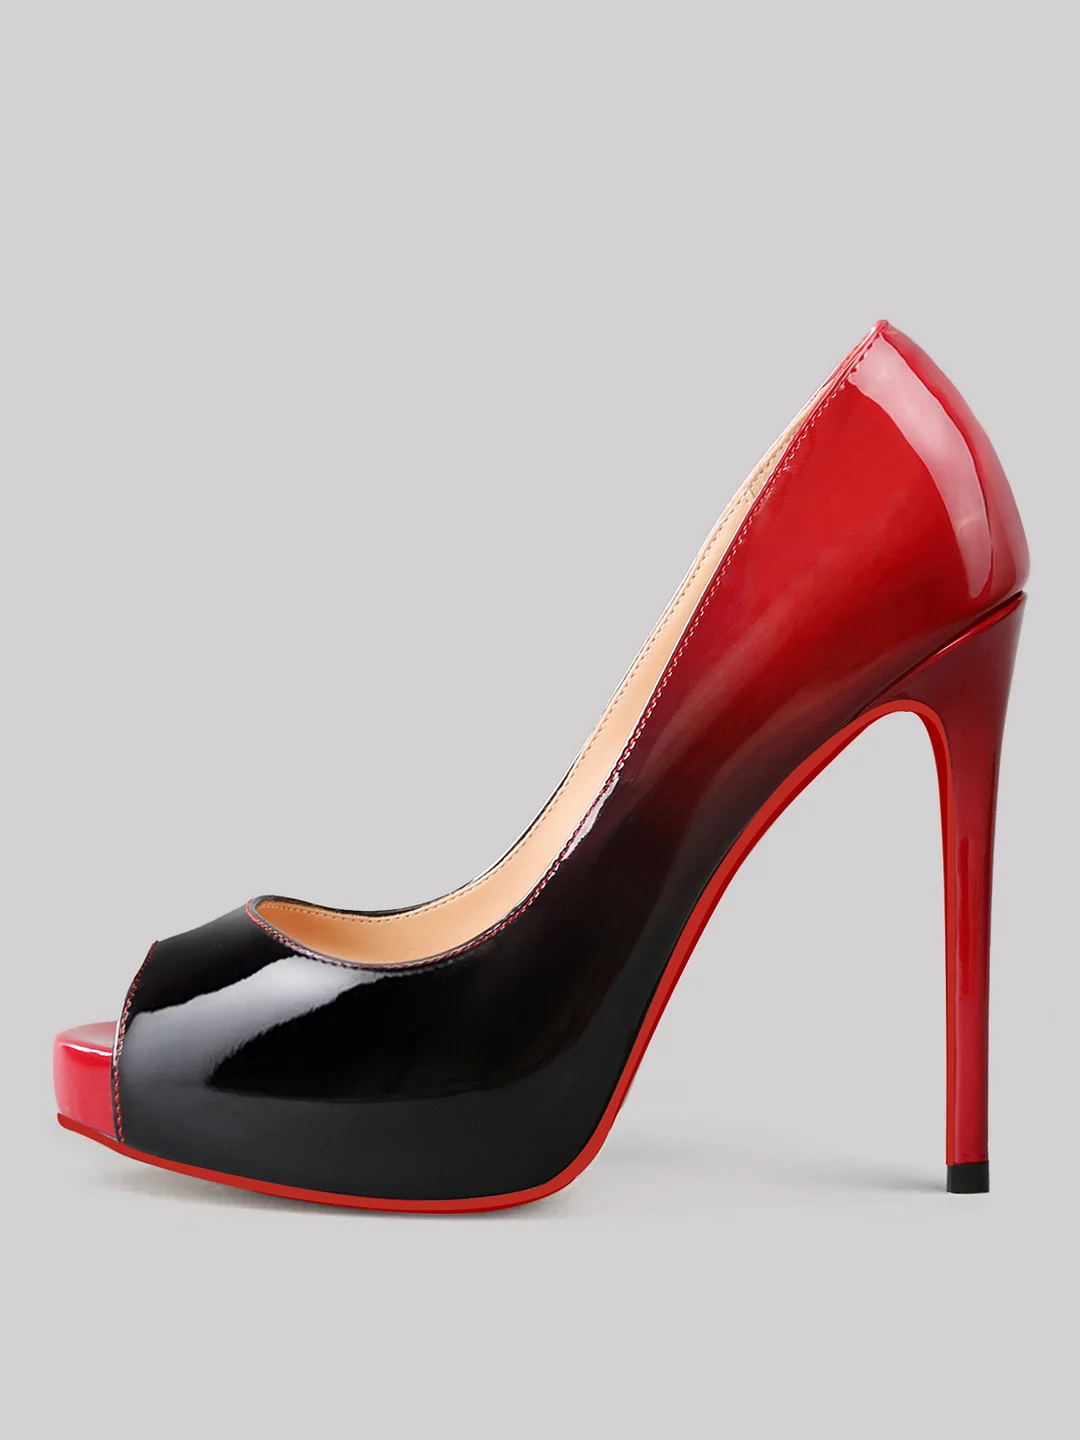 120mm Women's Peep Toe Platform Heels Red Bottom Party Wedding Pumps Patent Gradient Shoes